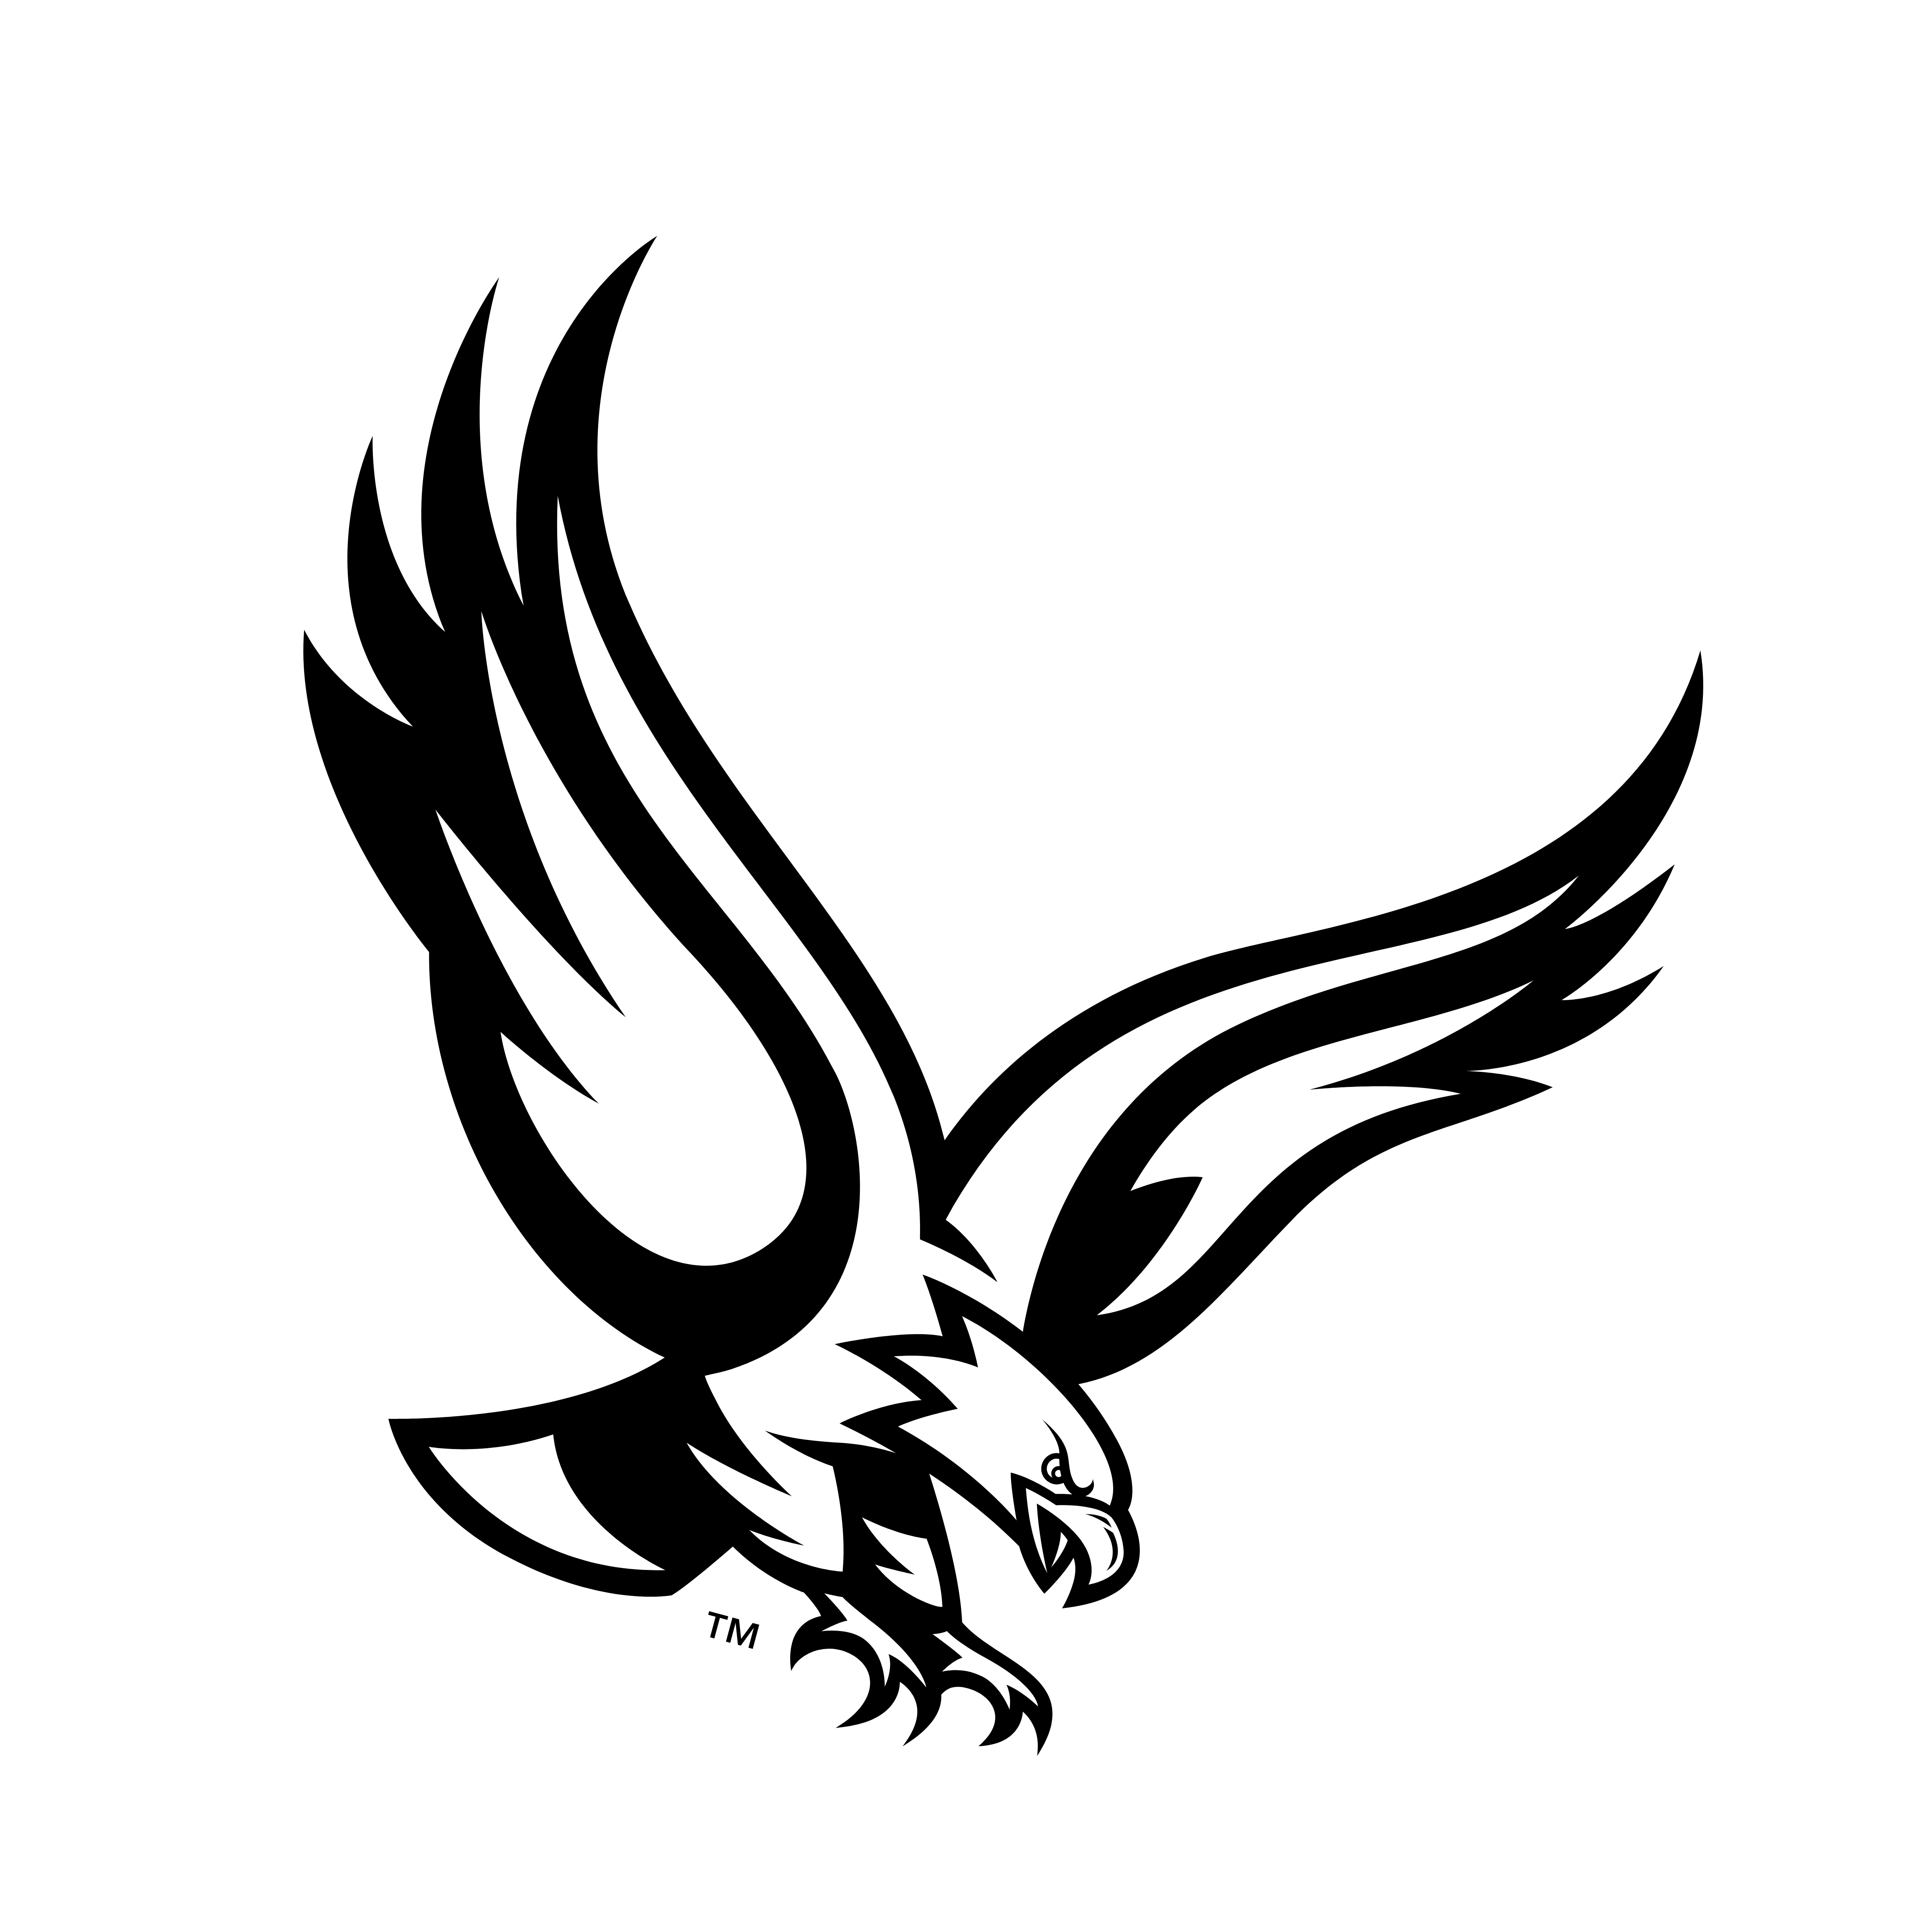 Boston College Eagles – Logos Download